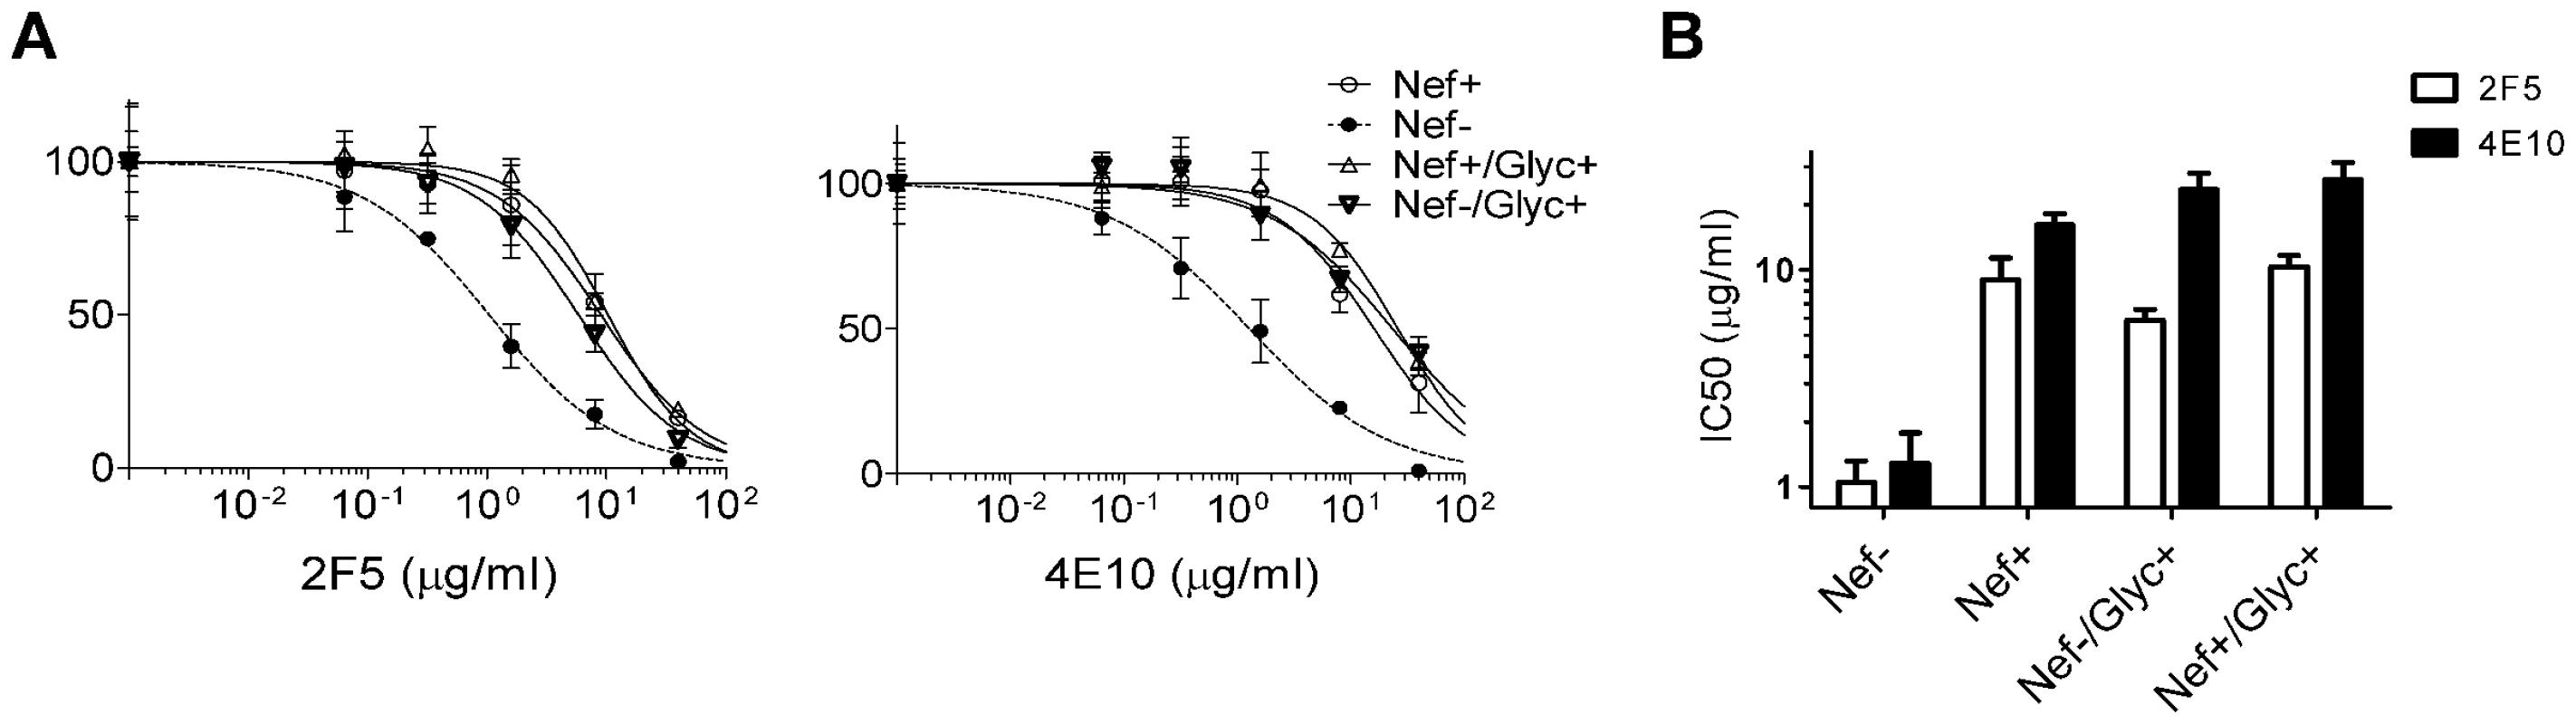 MoMLV Glycogag, like Nef, increases HIV-1 resistance to 2F5 and 4E10.